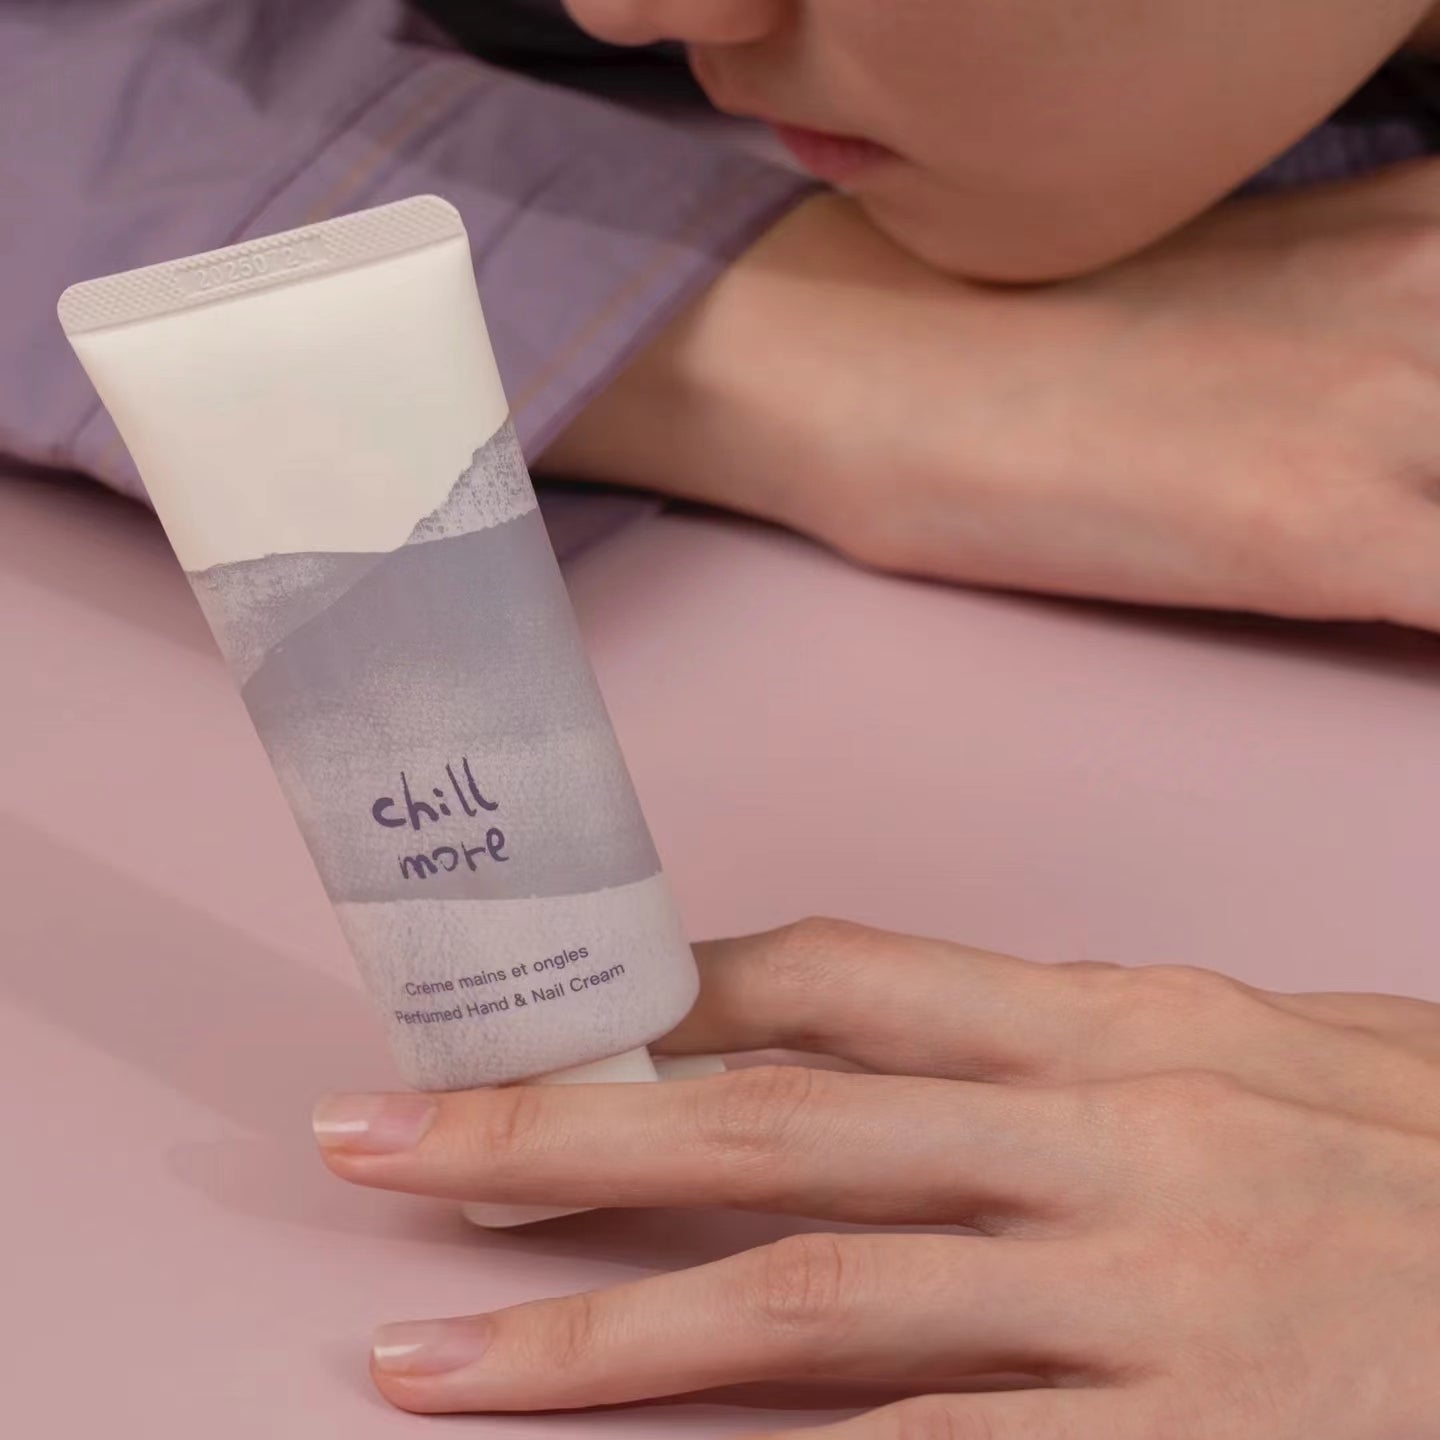 Chillmore Perfumed Hand Nail Cream 60ml 且悠香氛手甲精华霜